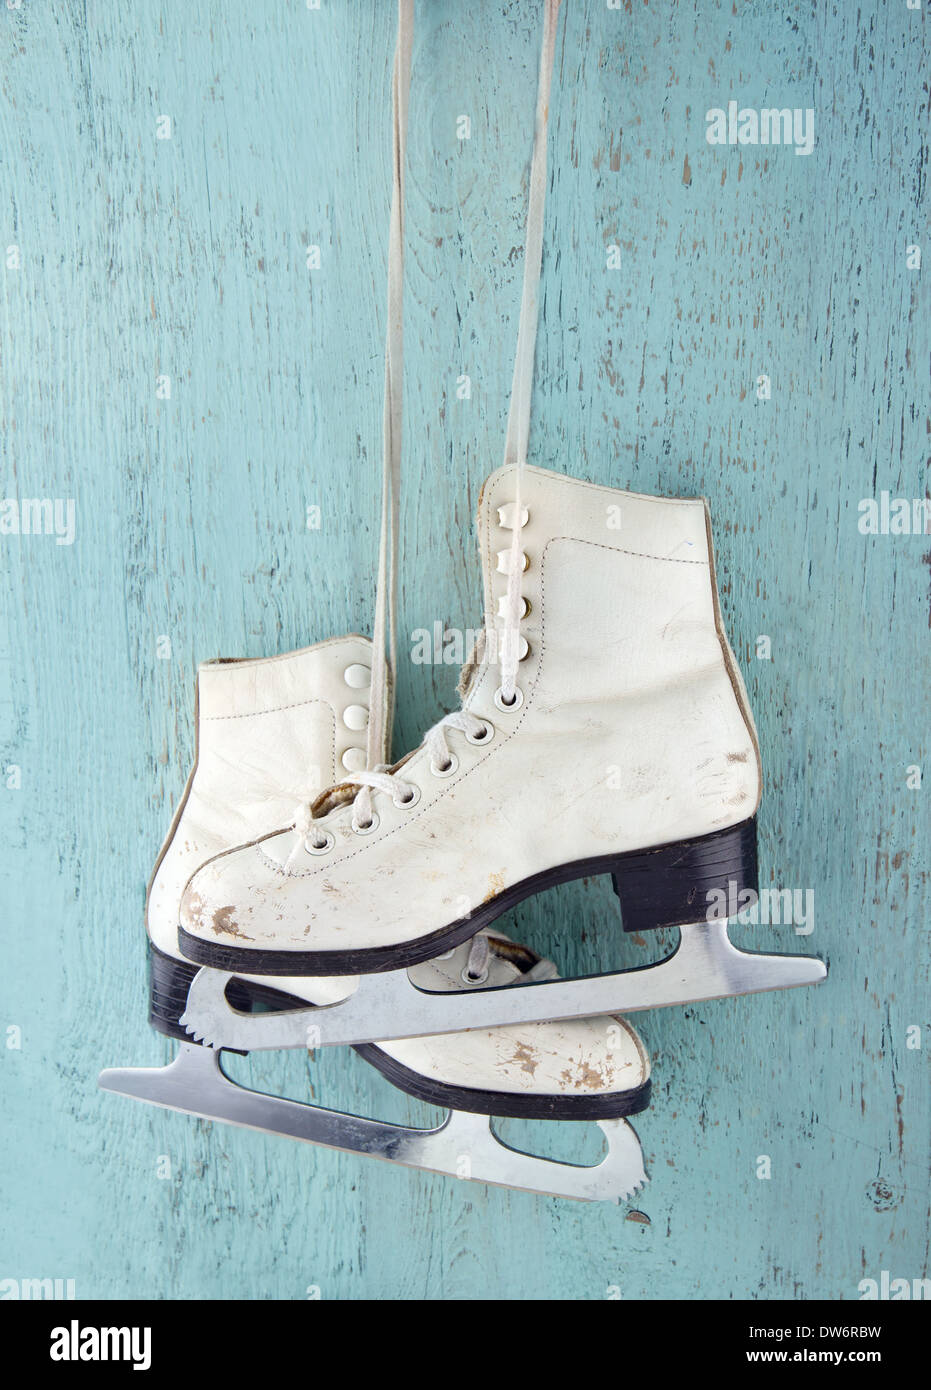 Pair of white women's ice skates on blue vintage wooden background - feminine winter sports concept Stock Photo